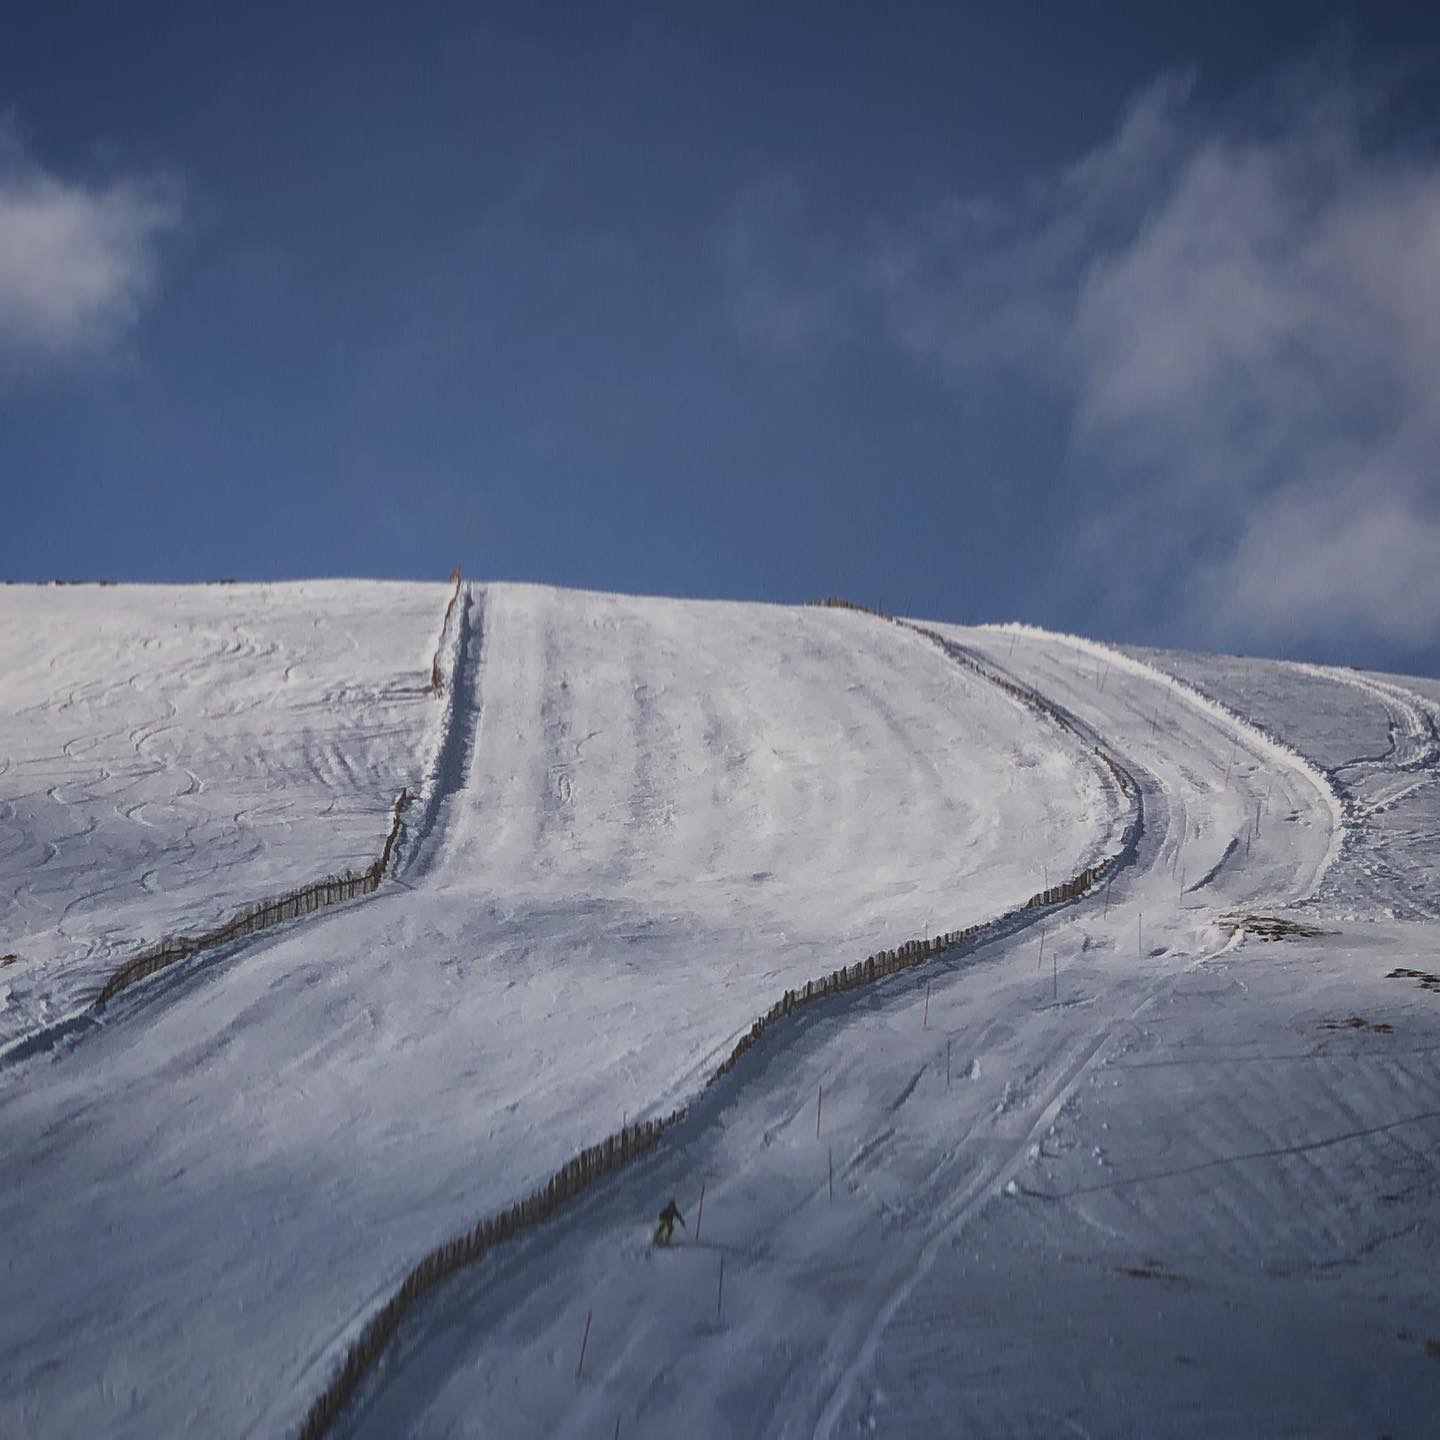 The slalom piste, Glenshee